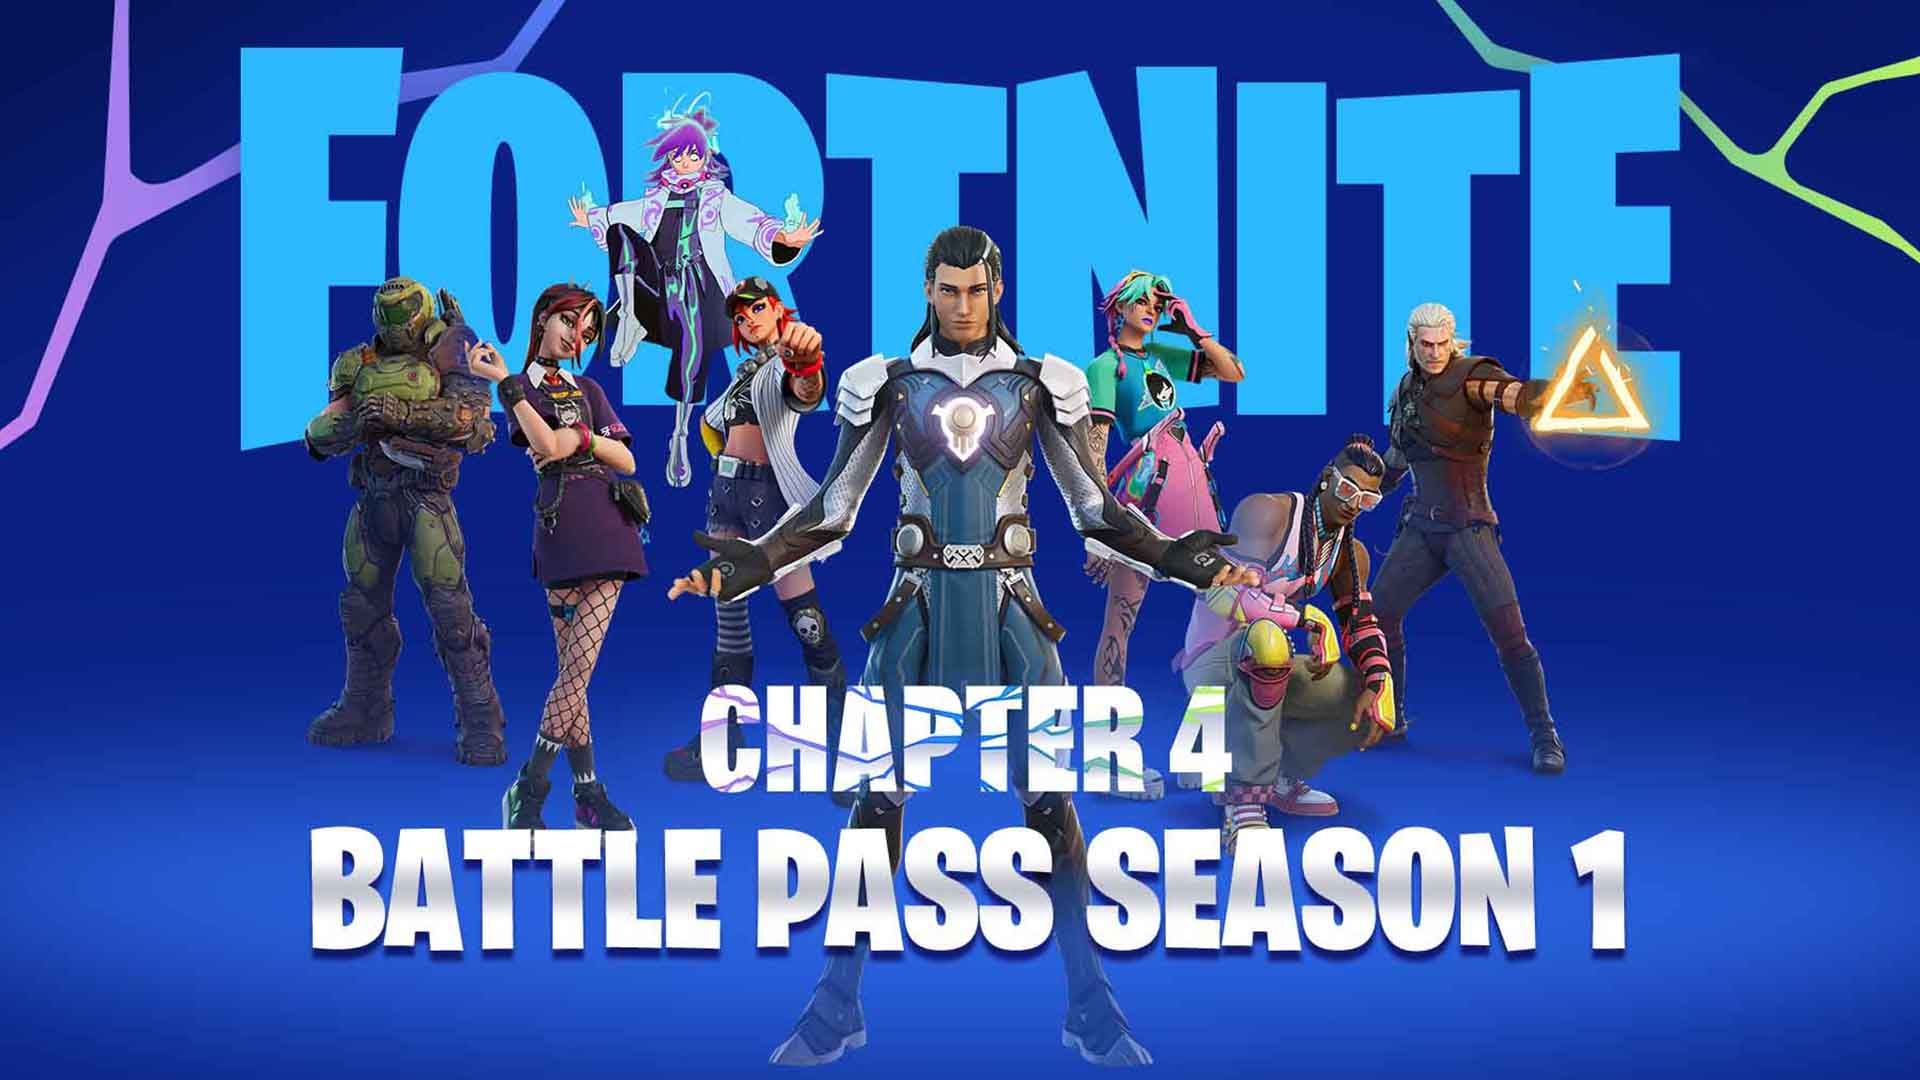 added chapter 1 season 7 battle pass